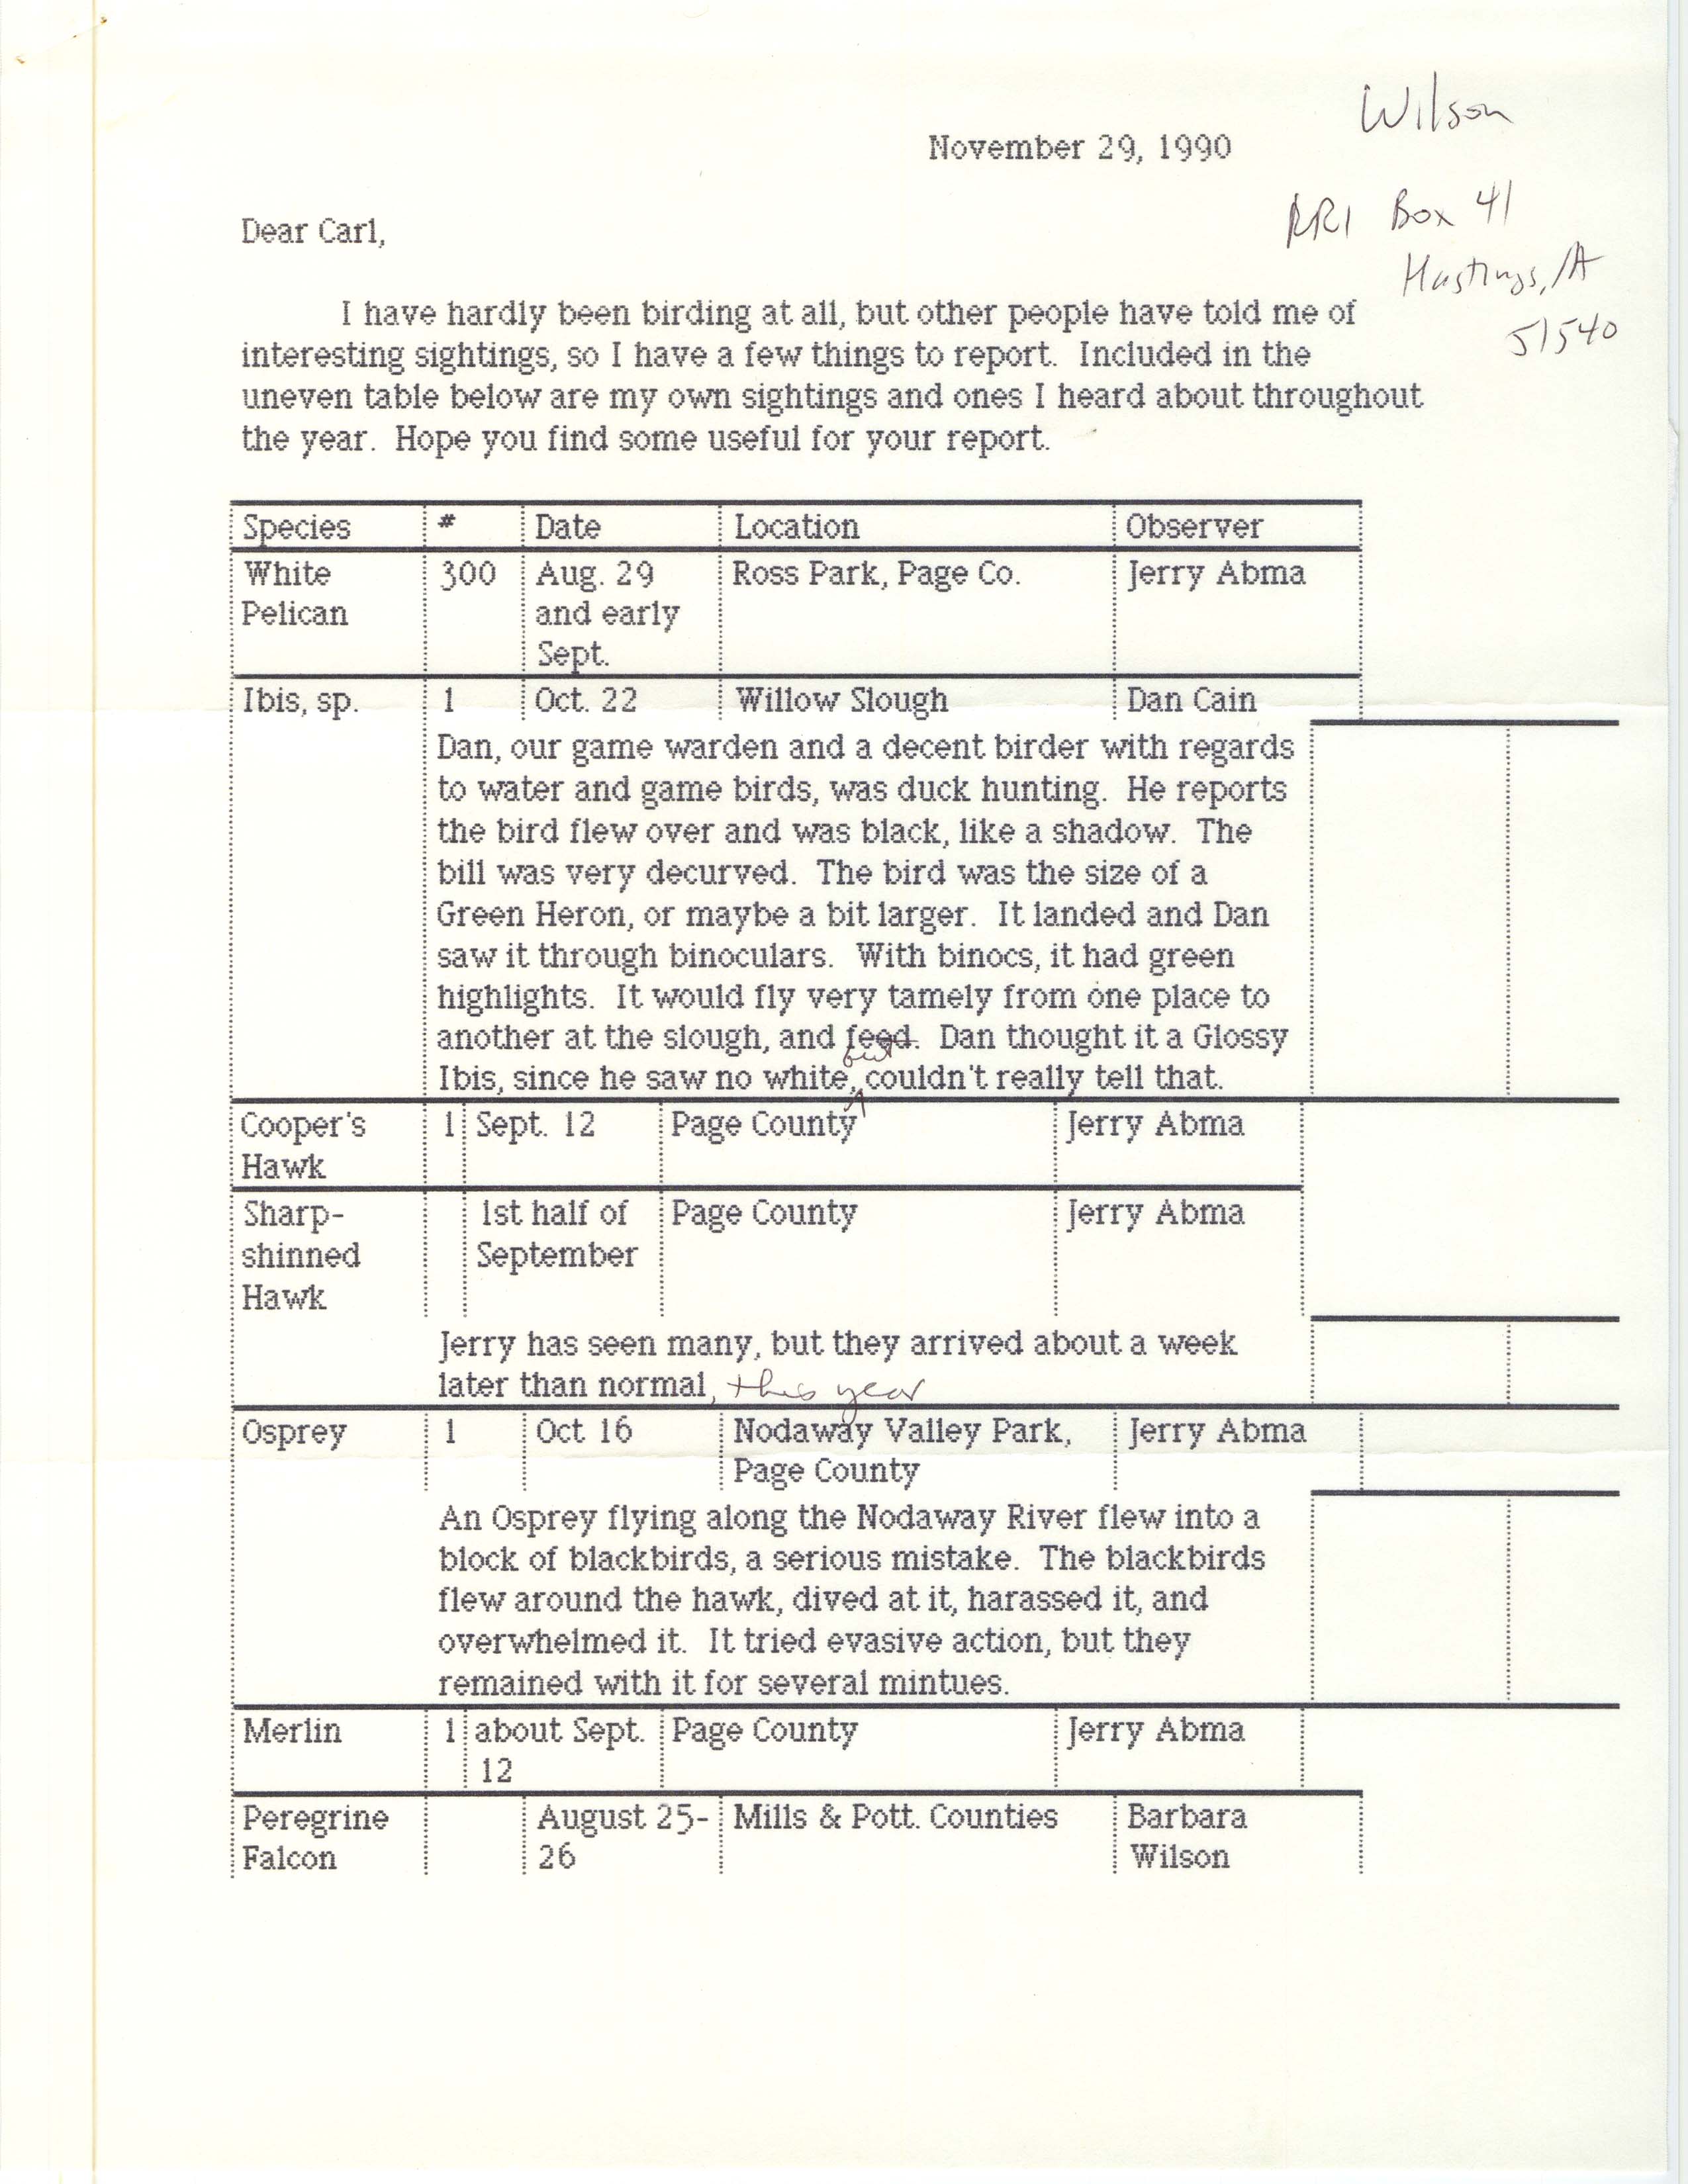 Field reports, Barb Wilson, fall 1990